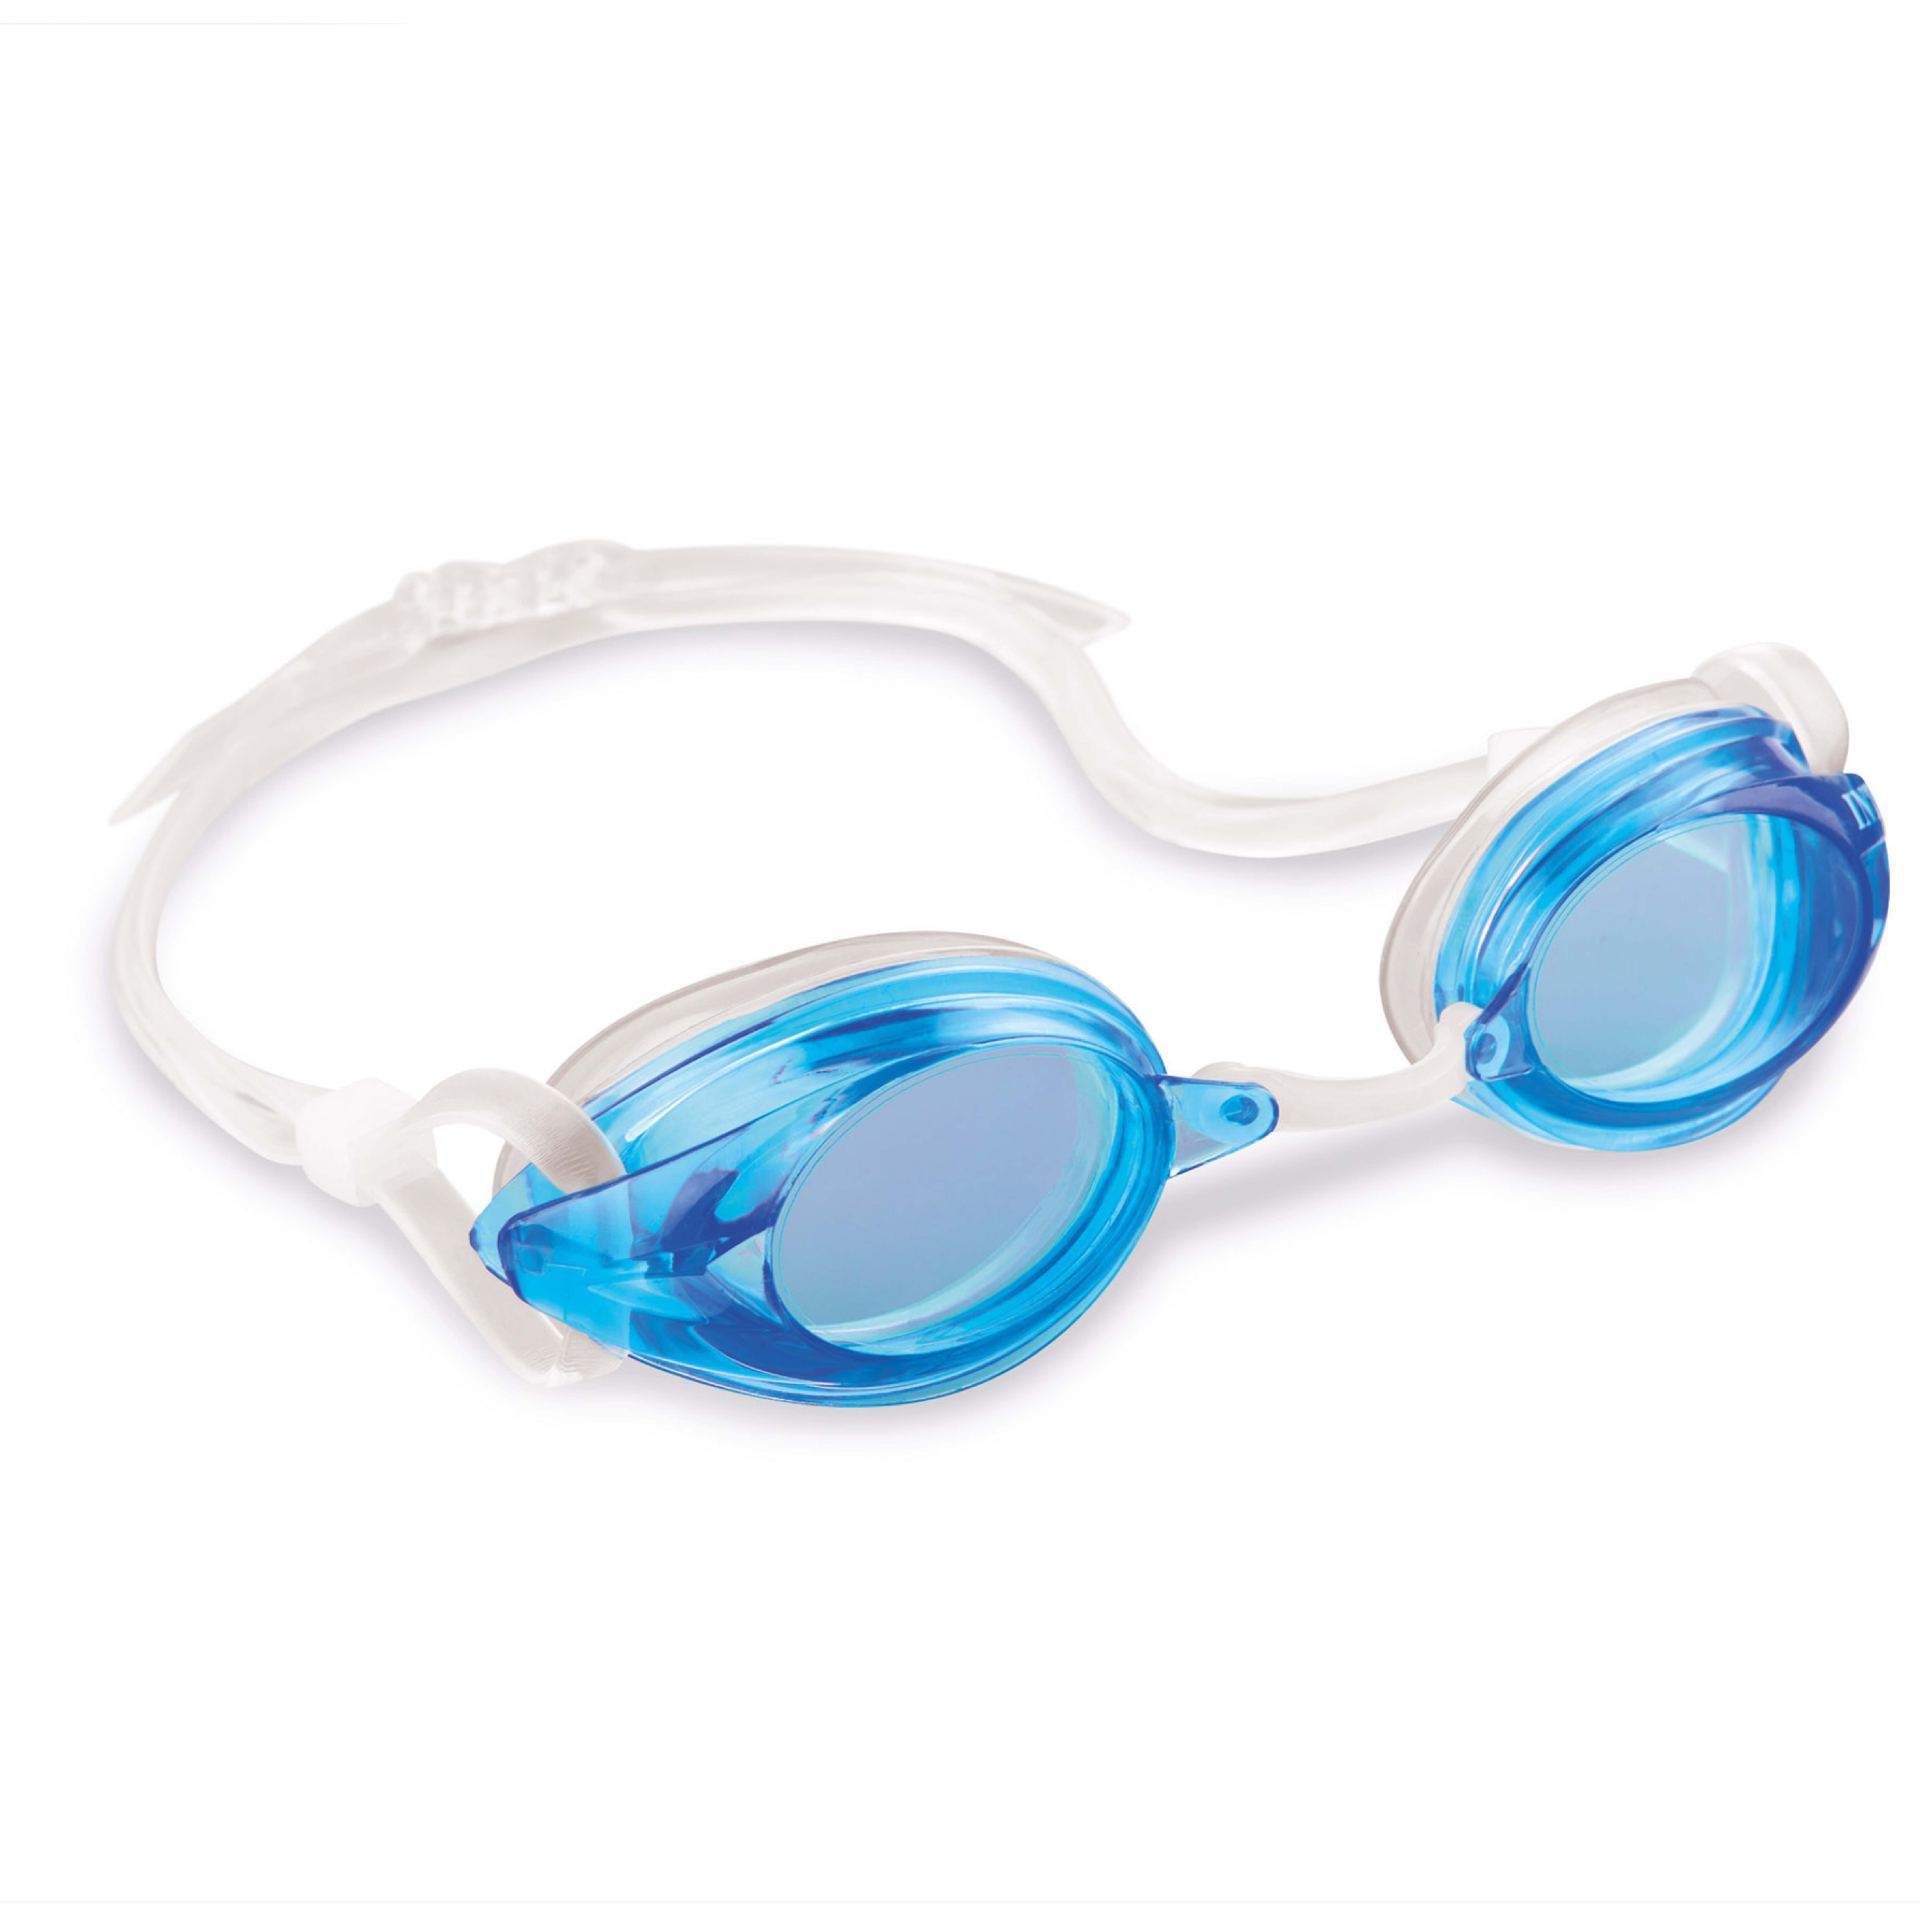 Intex sport relay goggles - Blauw